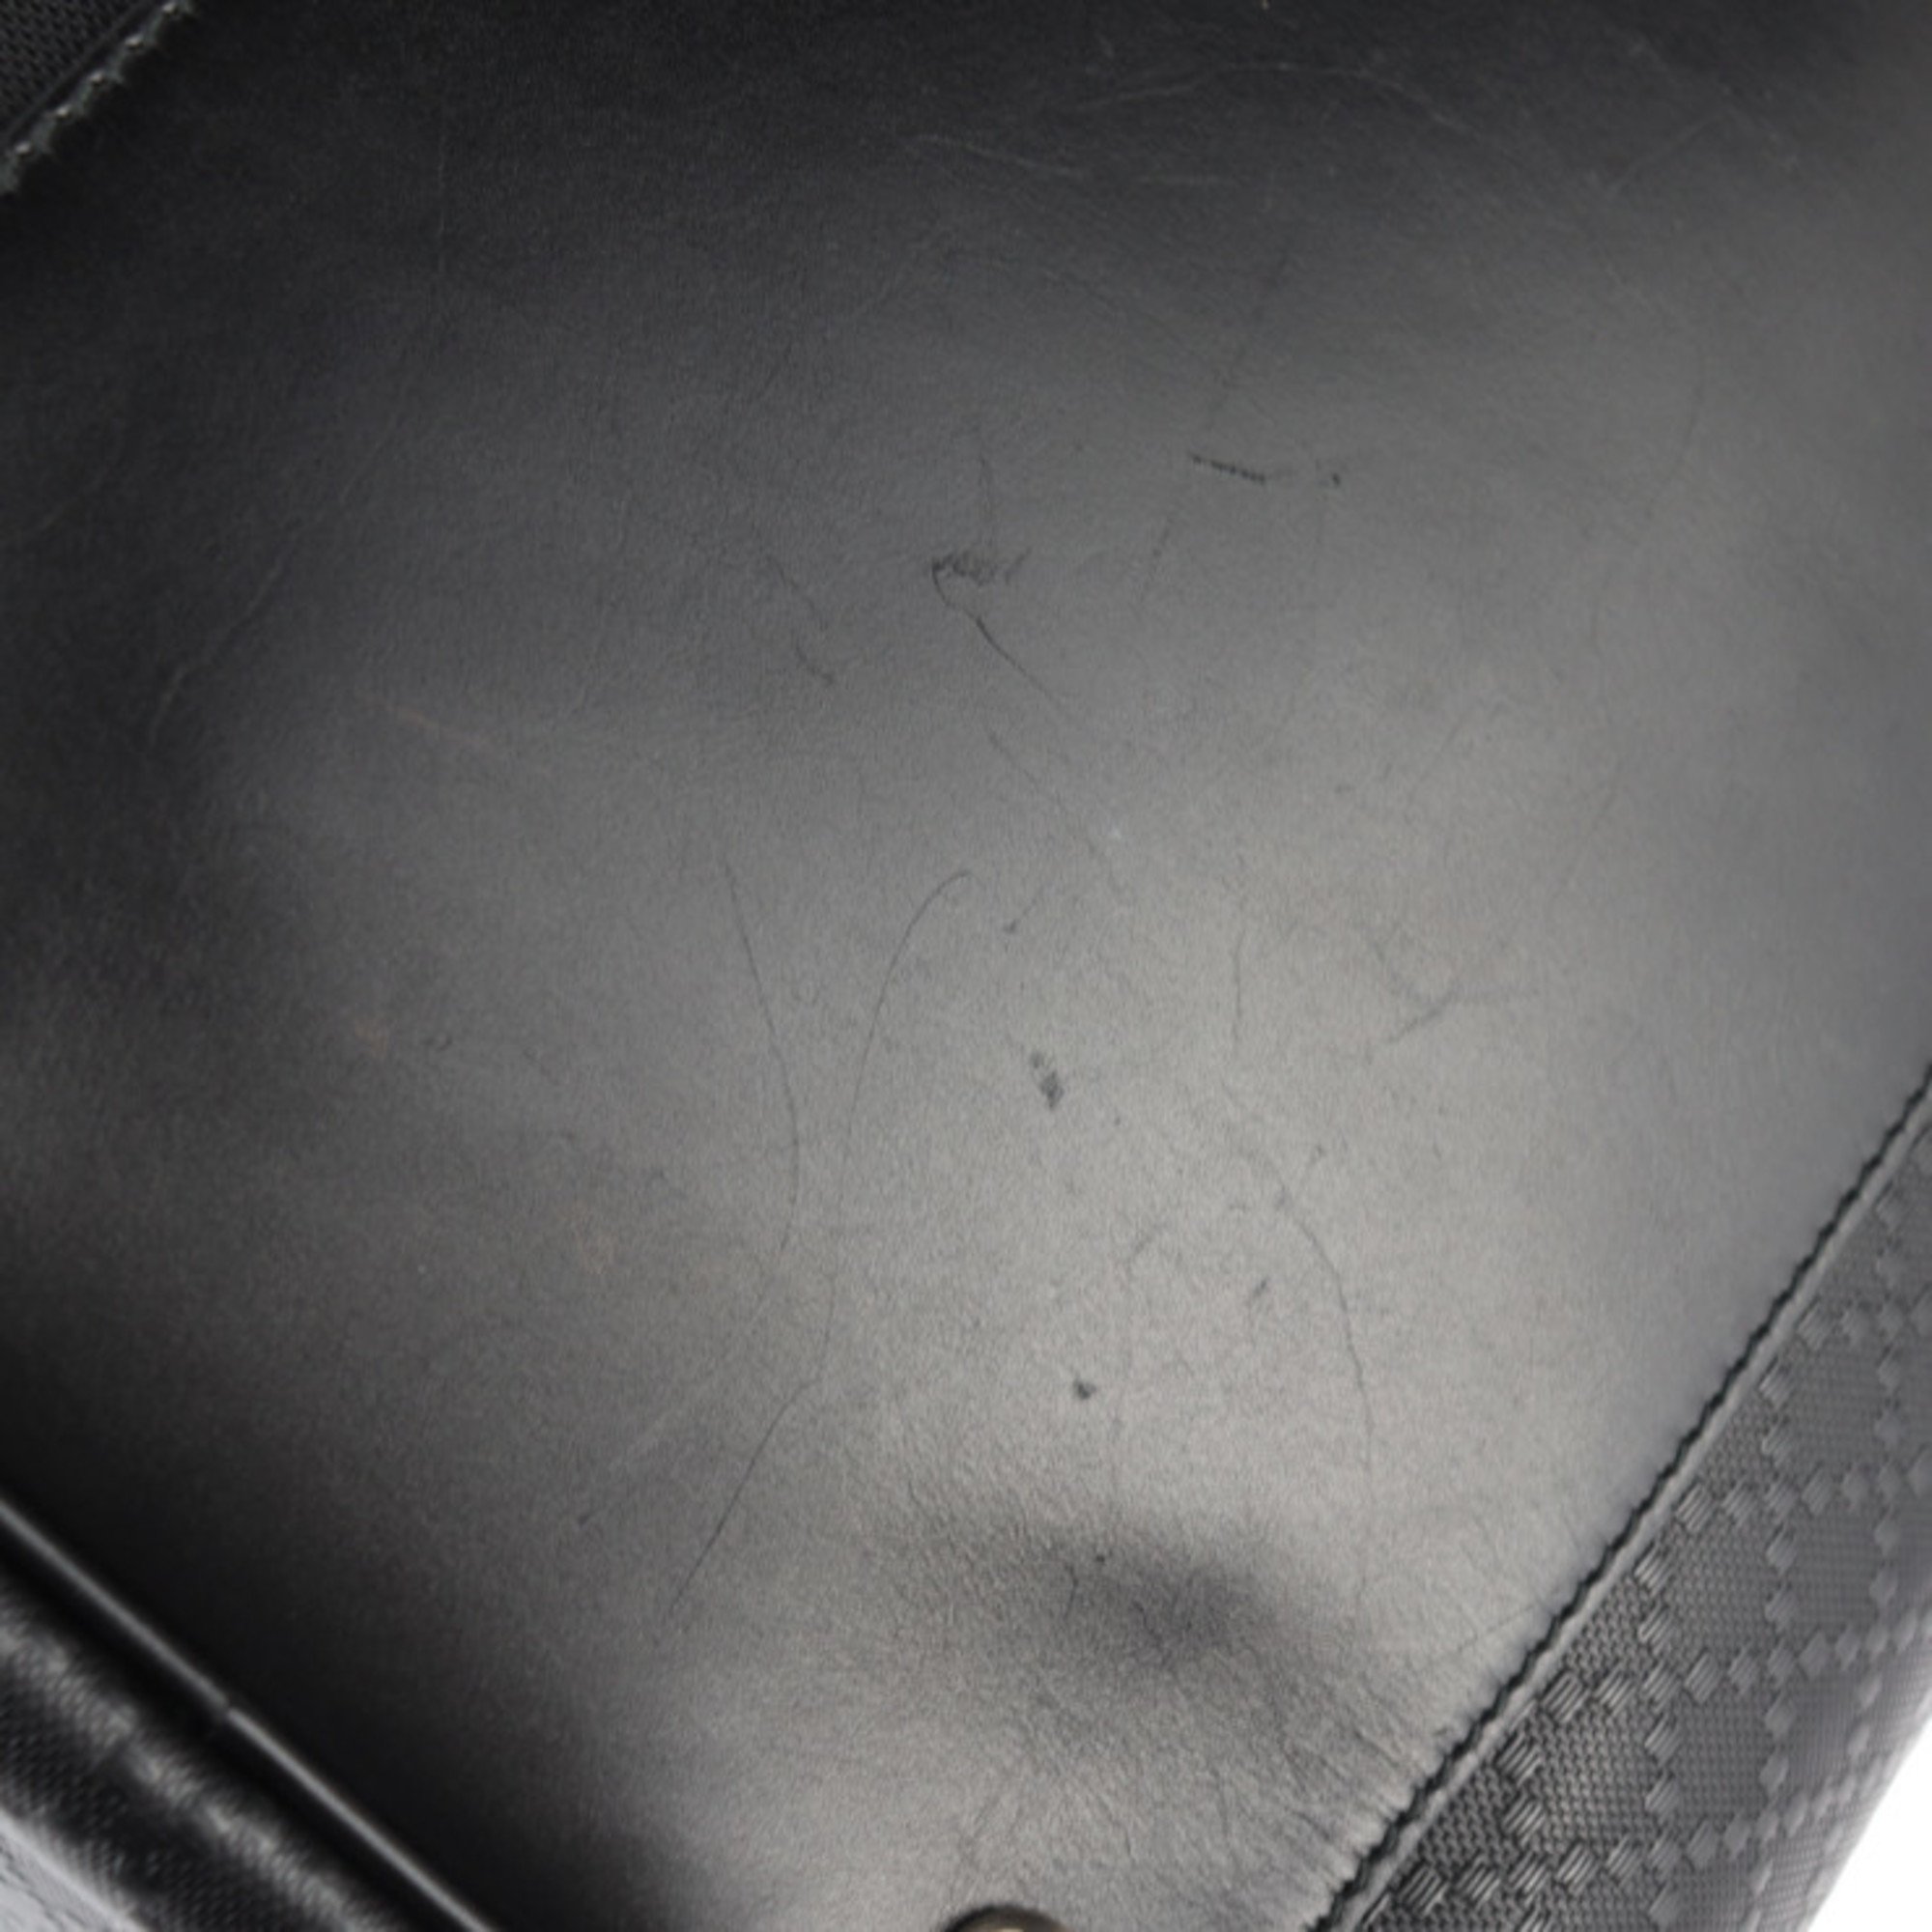 GUCCI Diamante Boston Bag 206500 Embossed Leather Black Shoulder